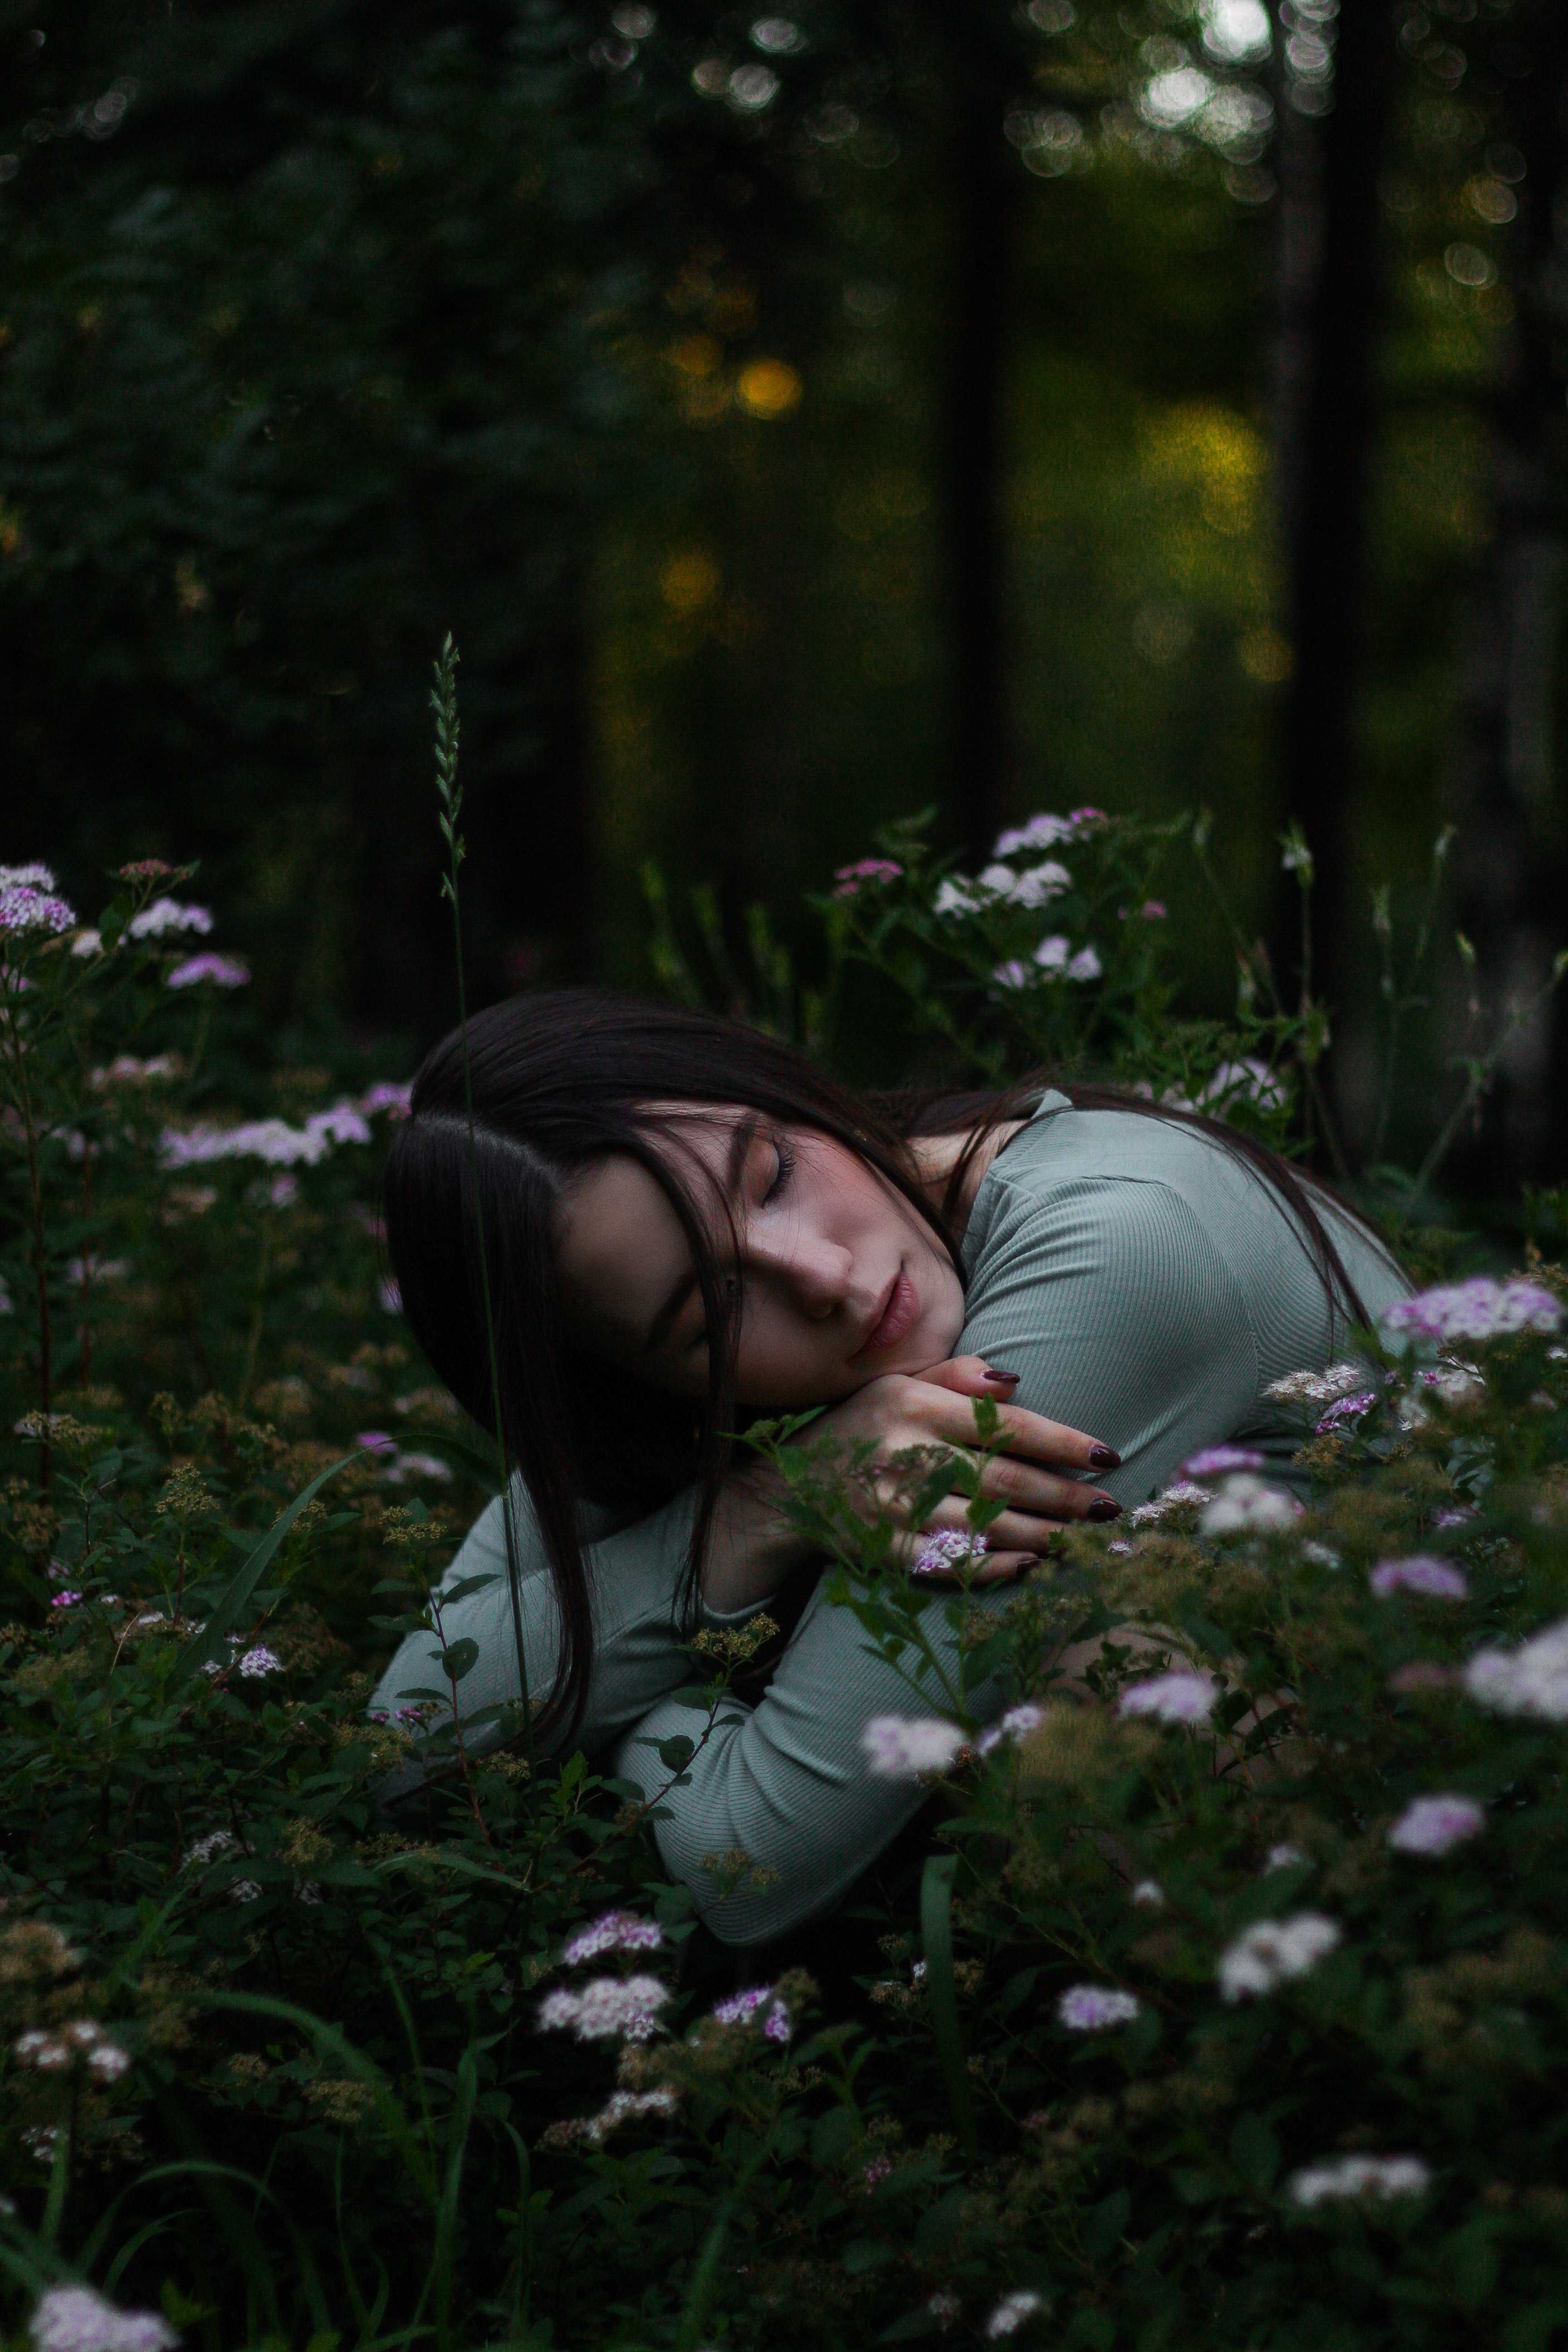 A woman lying in flowers. | Source: Pexels